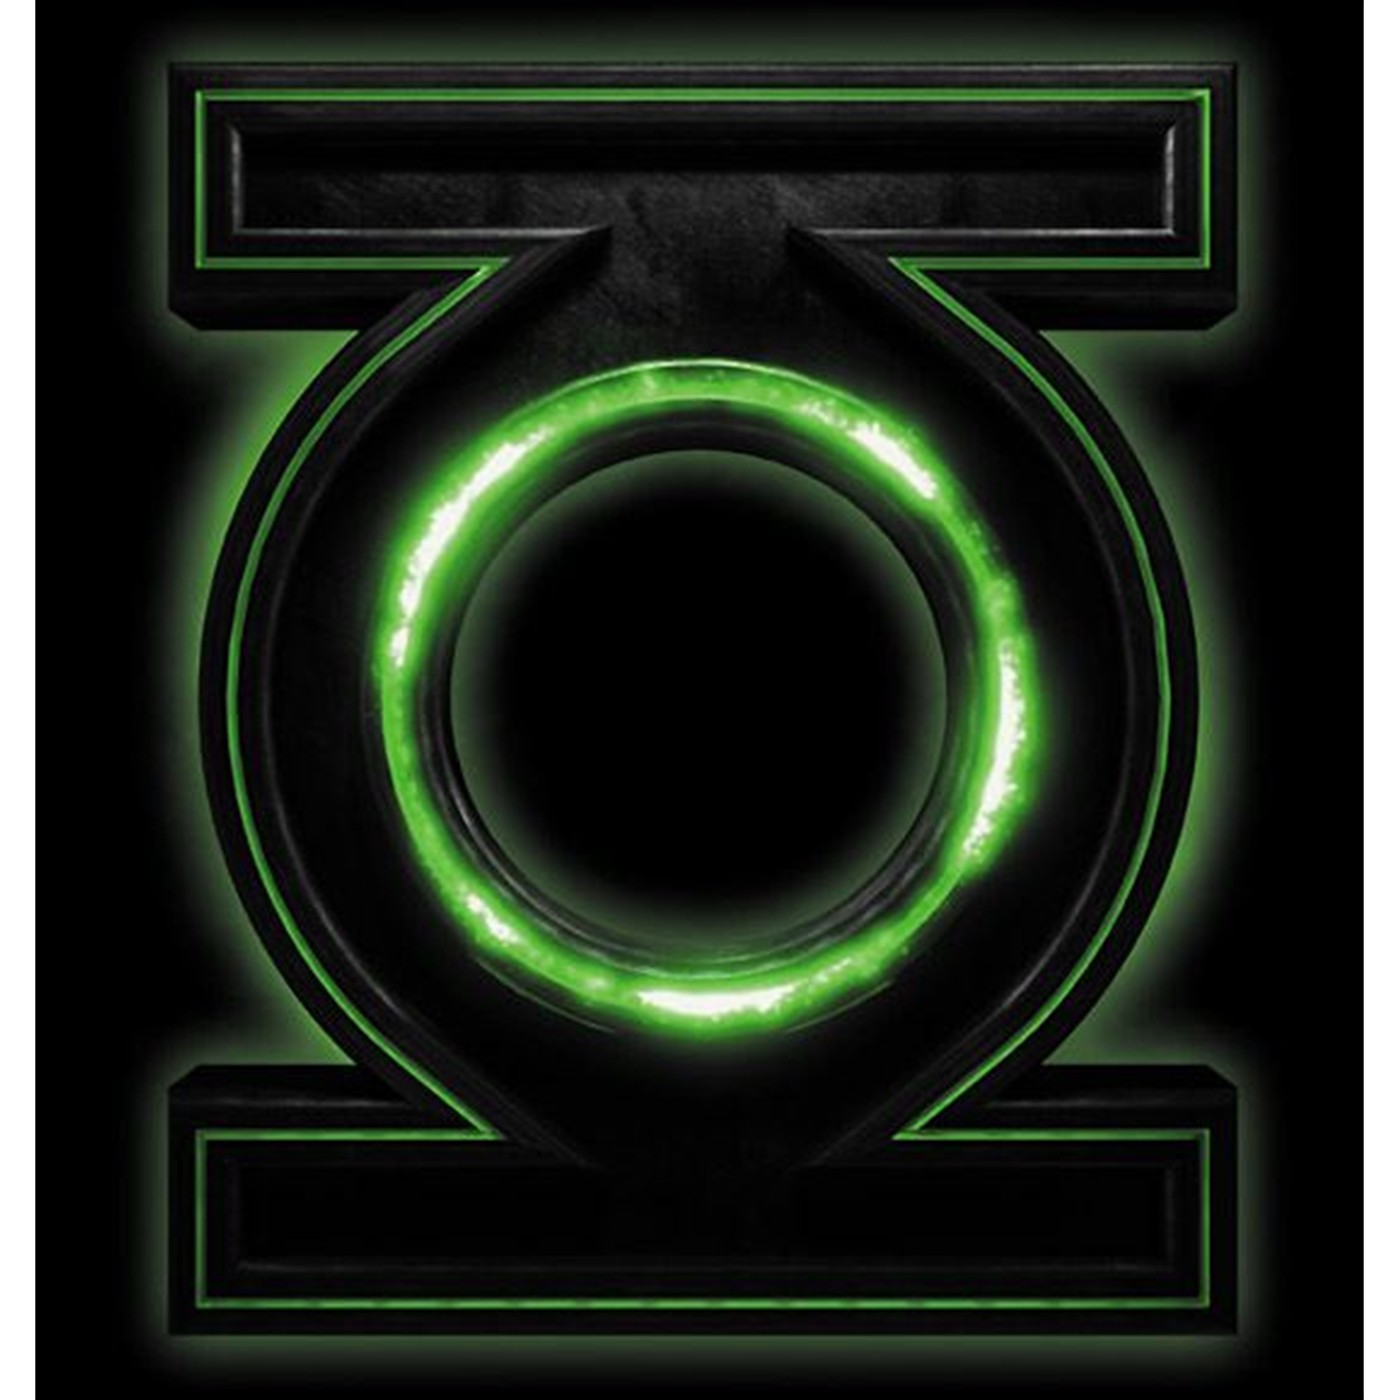 Green Lantern Movie 3D Symbol T-Shirt